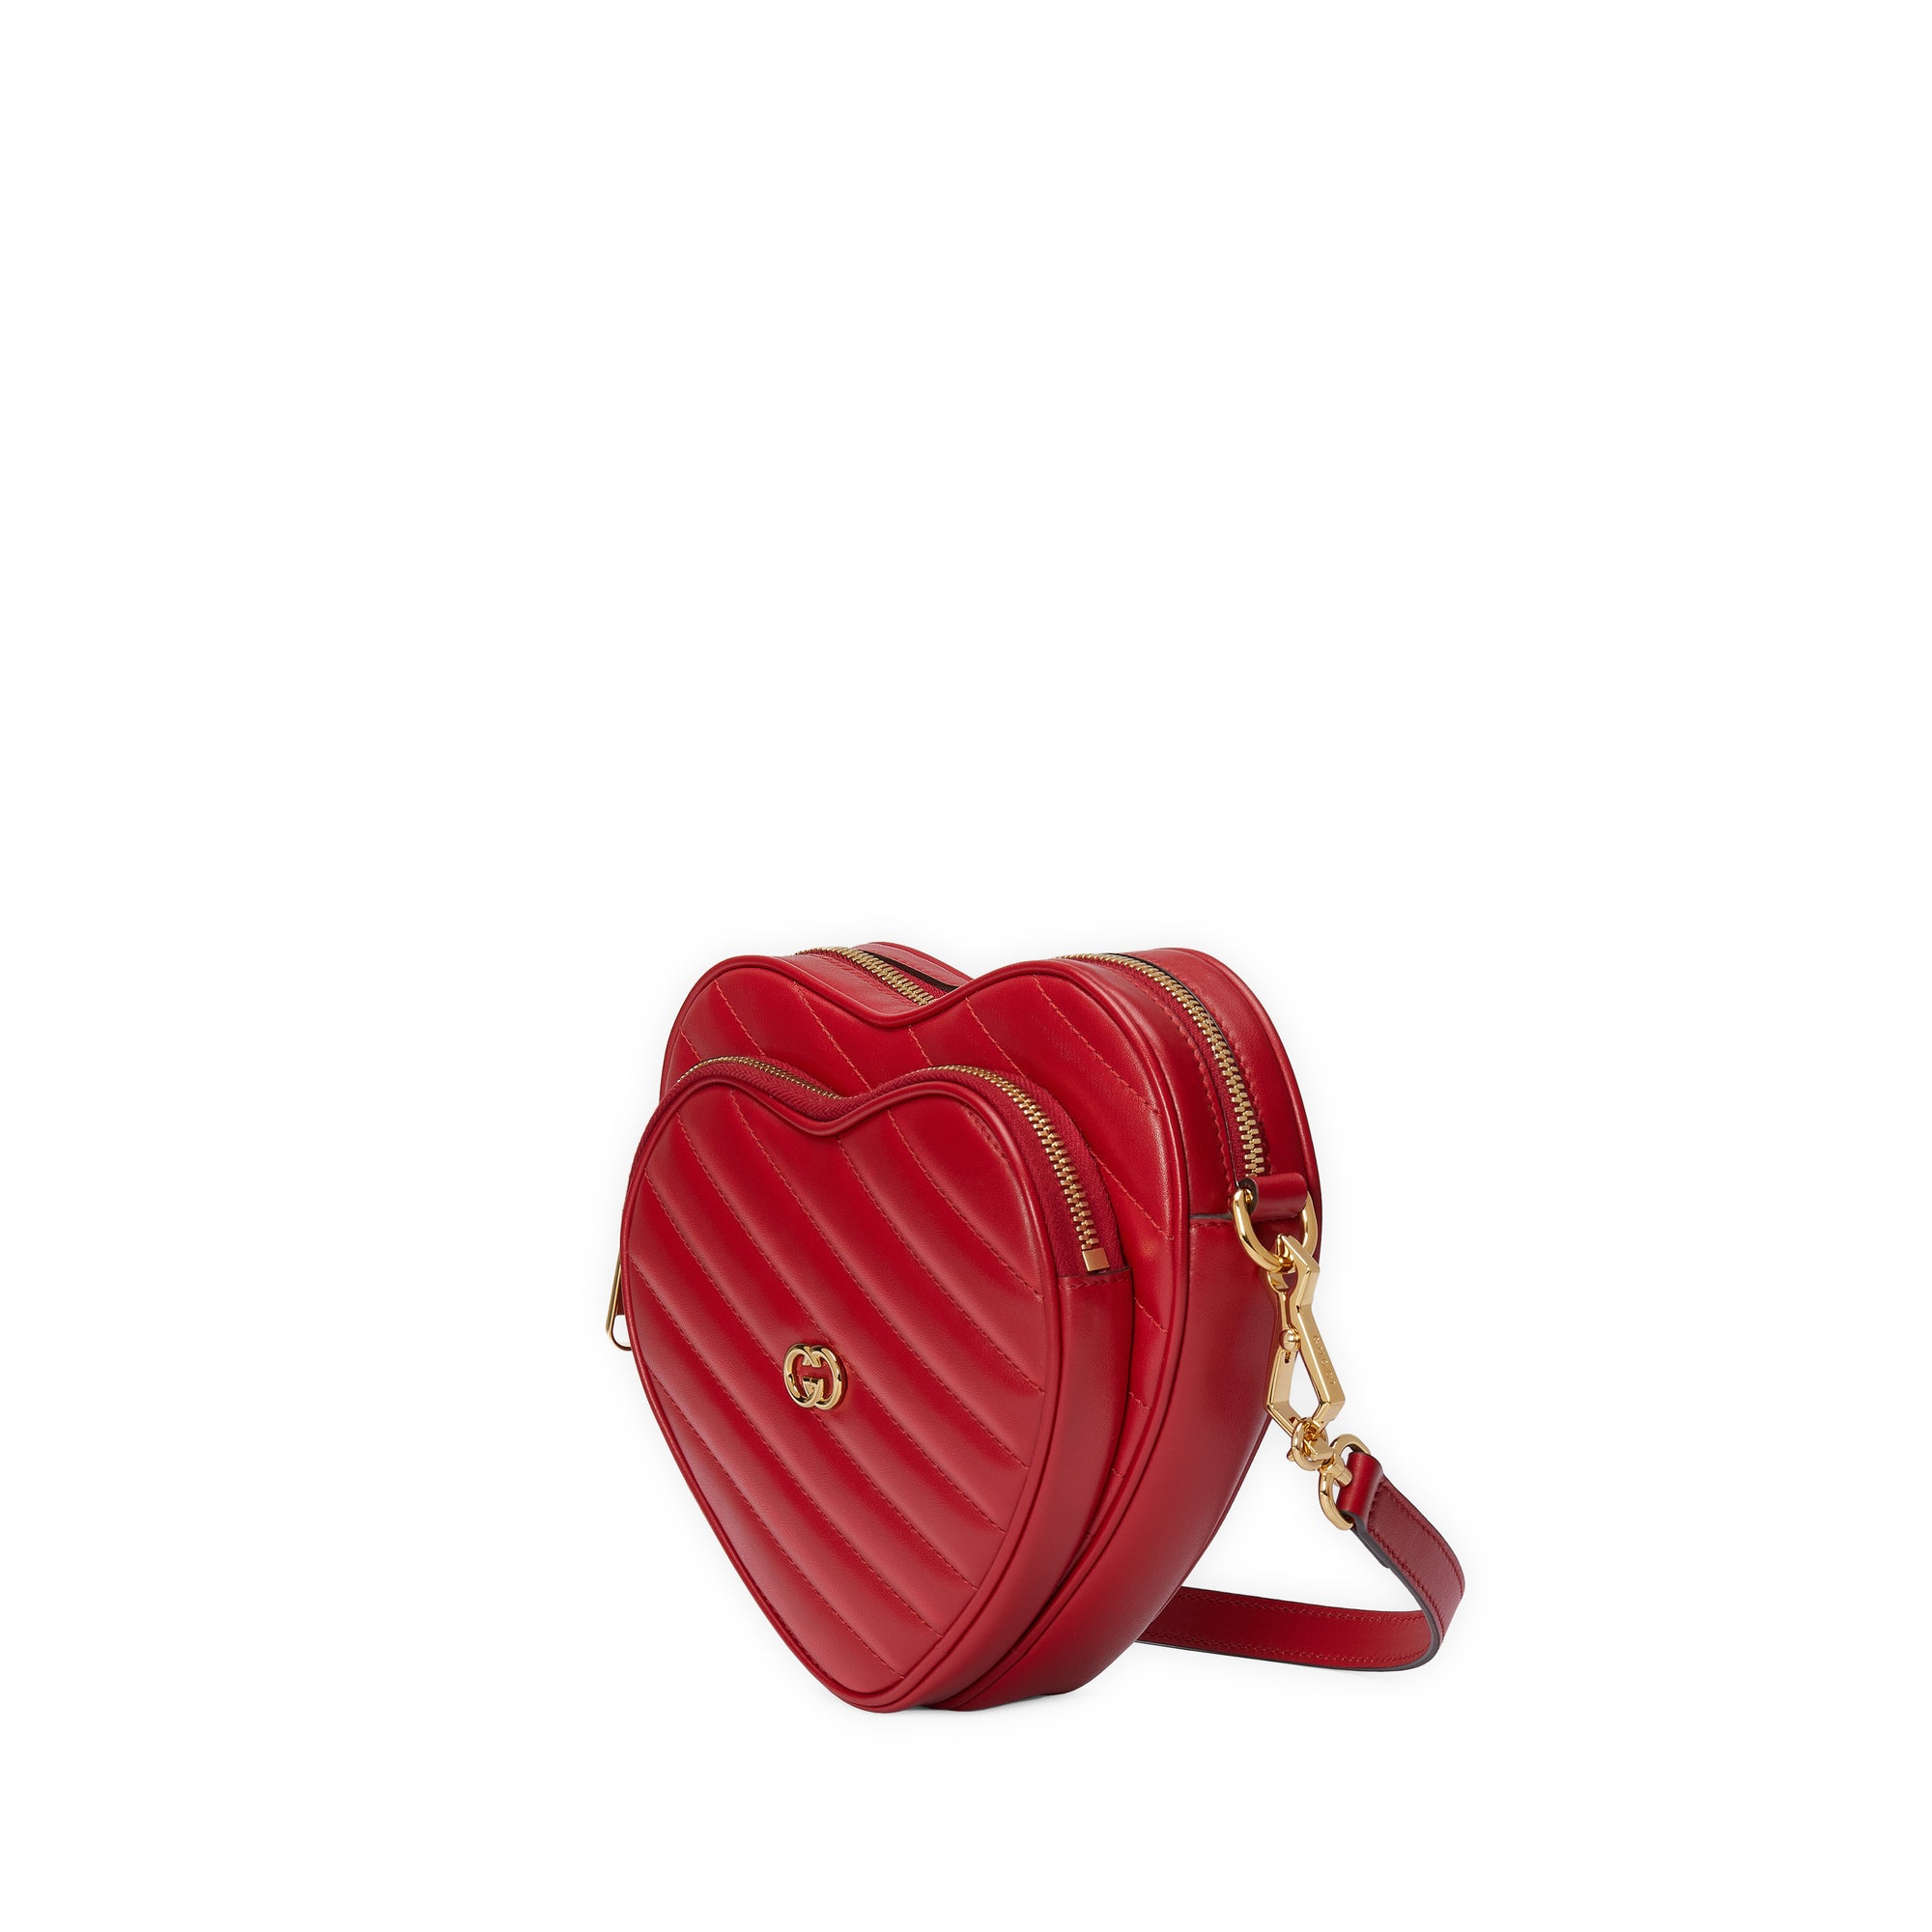 Gucci - Women's Interlocking G Mini Heart Shoulder Bag - (Red) view 2